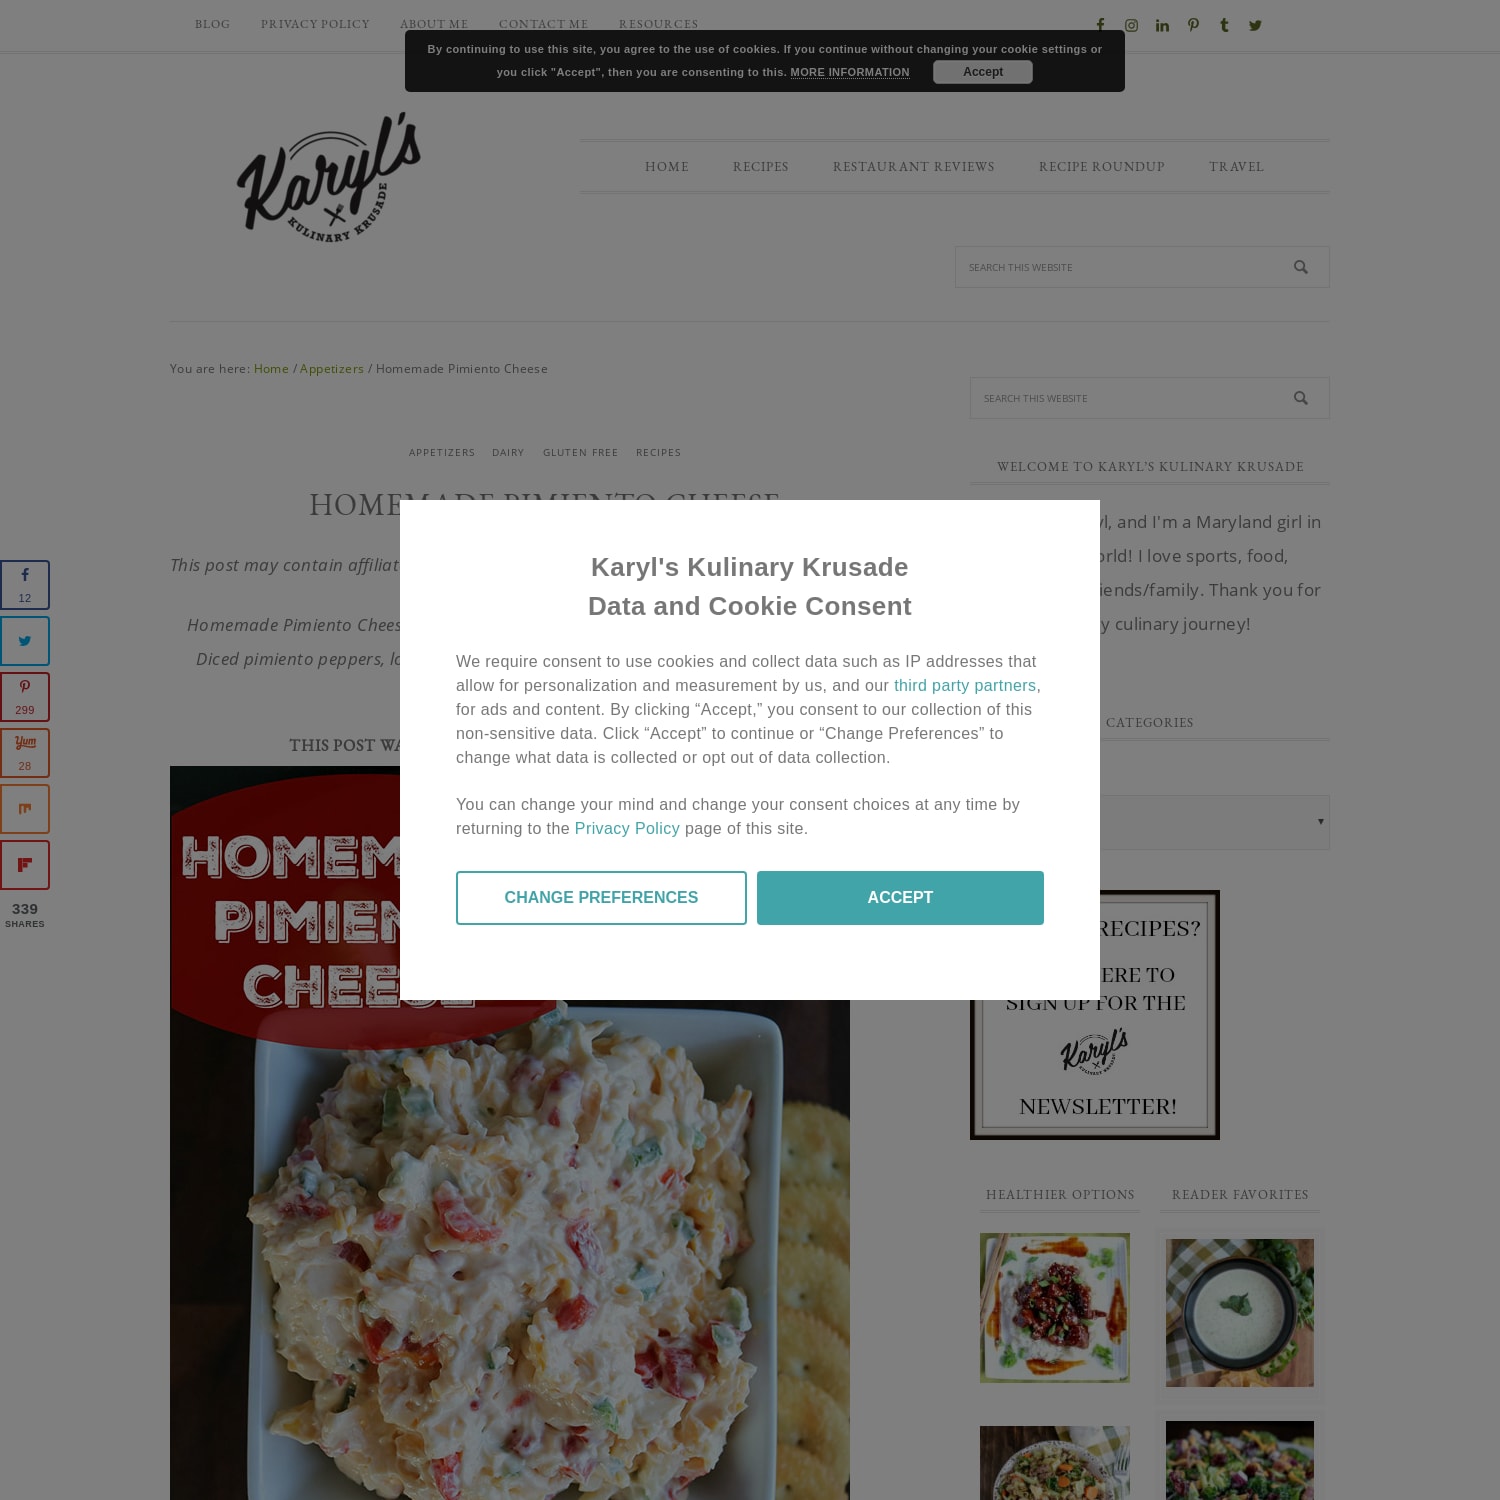 Homemade Pimiento Cheese | Karyl's Kulinary Krusade